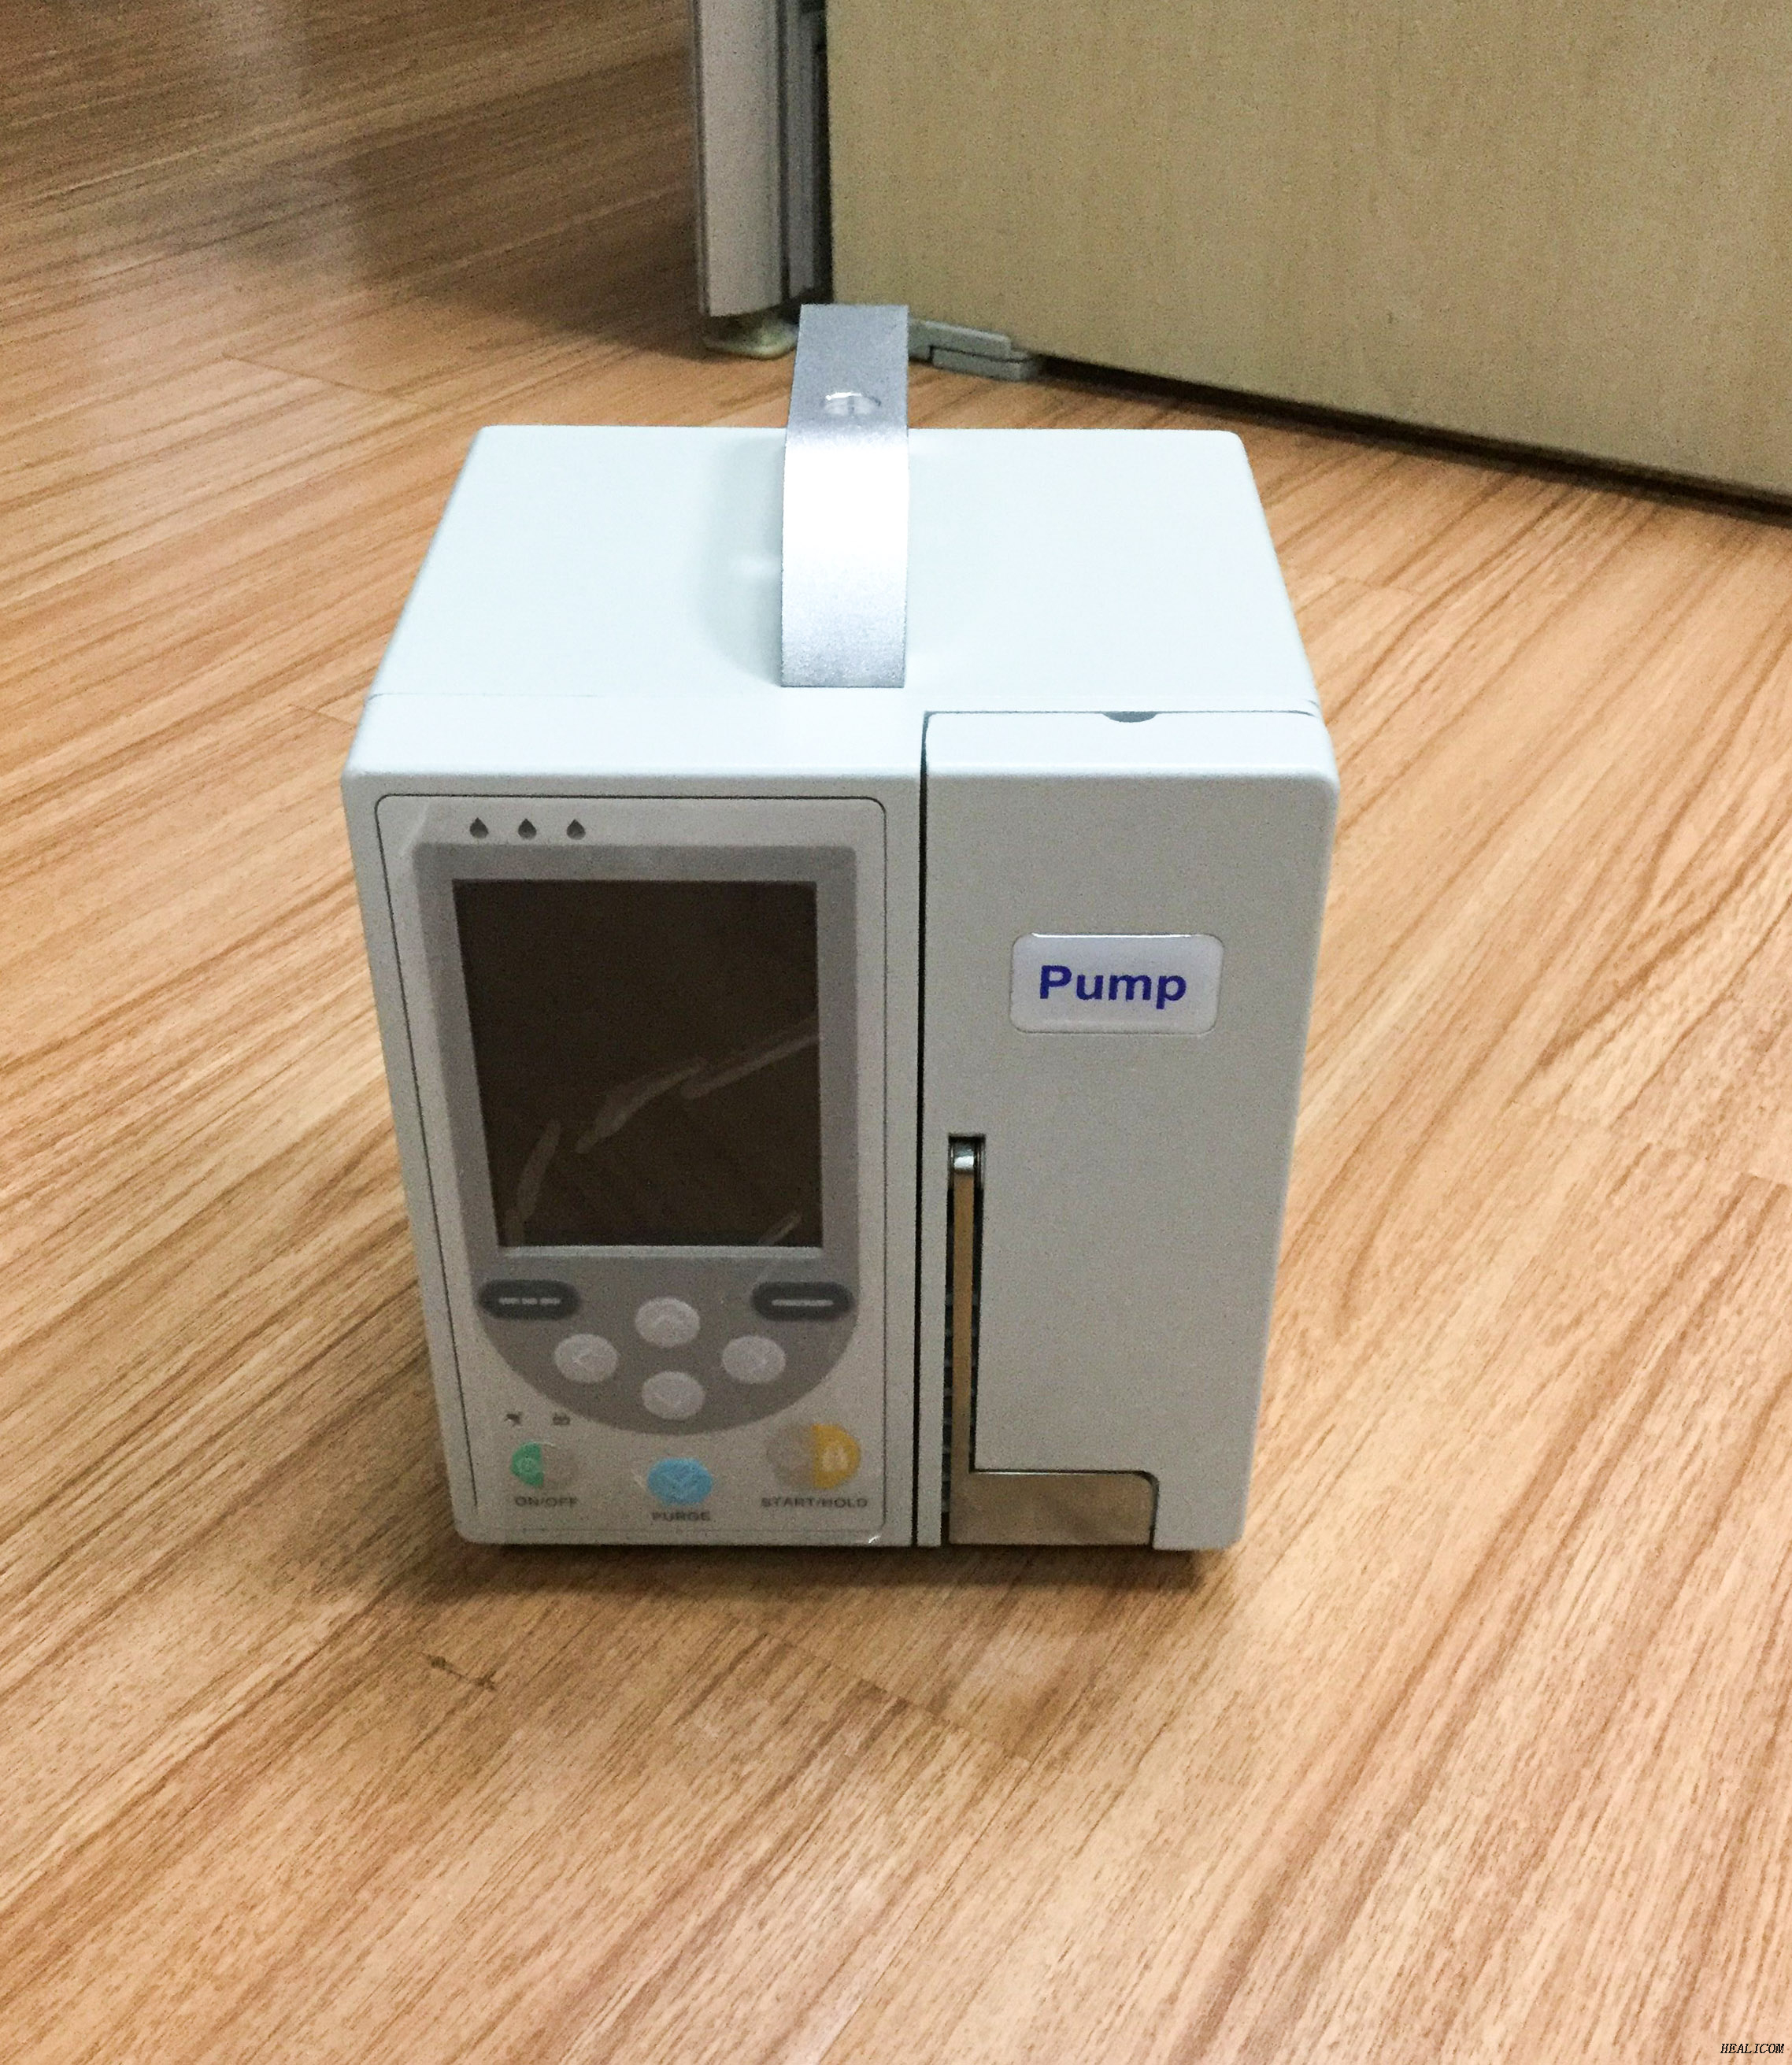 SP750 Portable LED screen medical syringe infusion pump for hospital